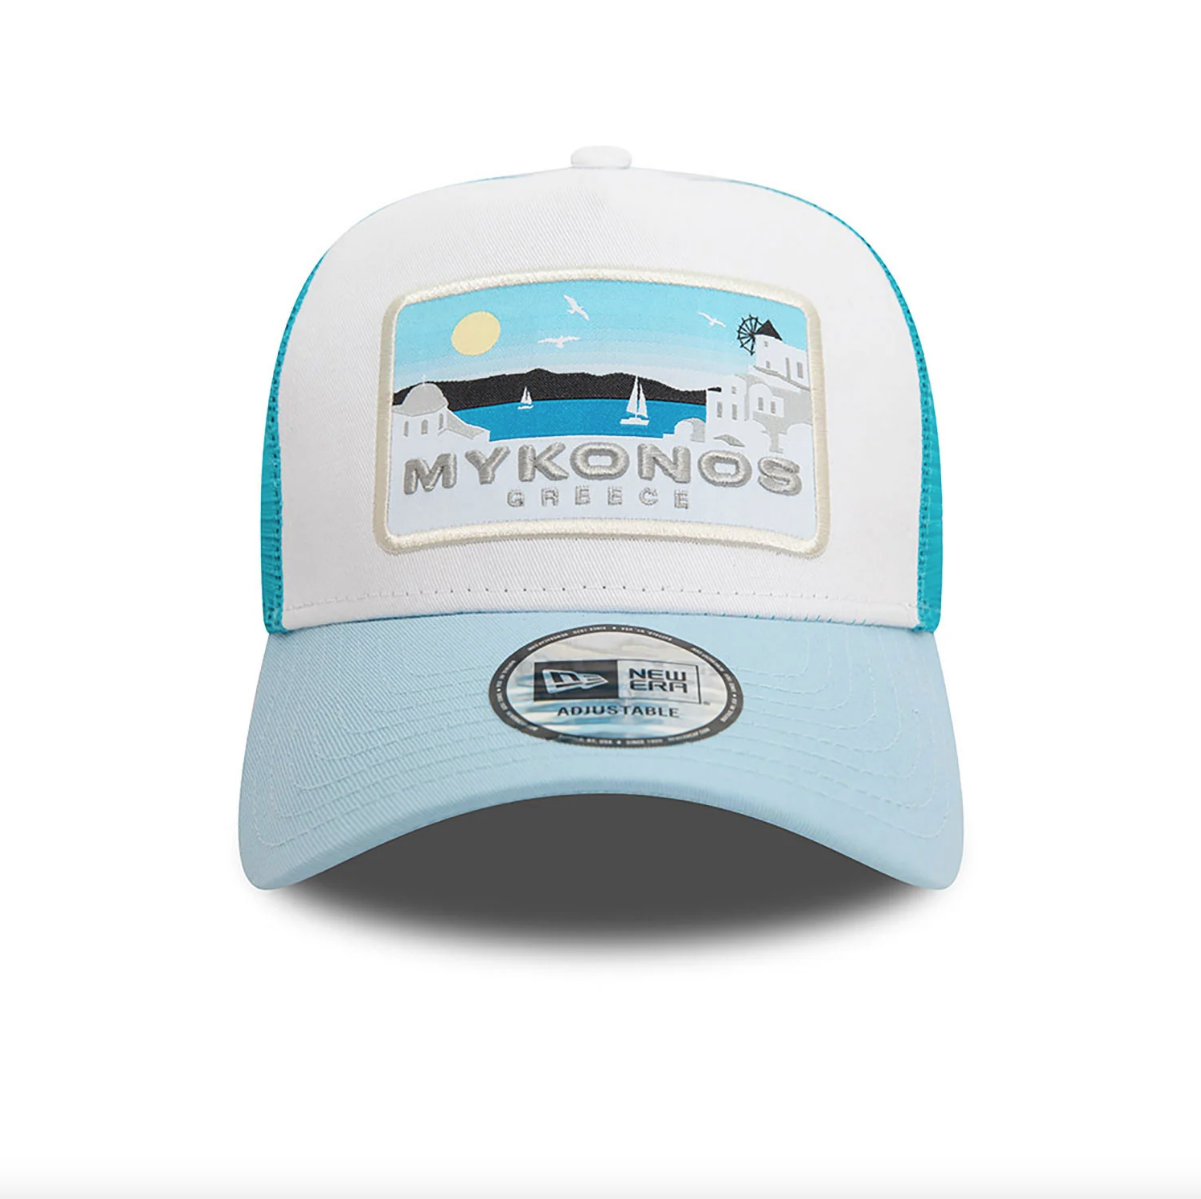 New Era - NE Summer - Trucker Cap - Light Blue/White/Blue - Headz Up 